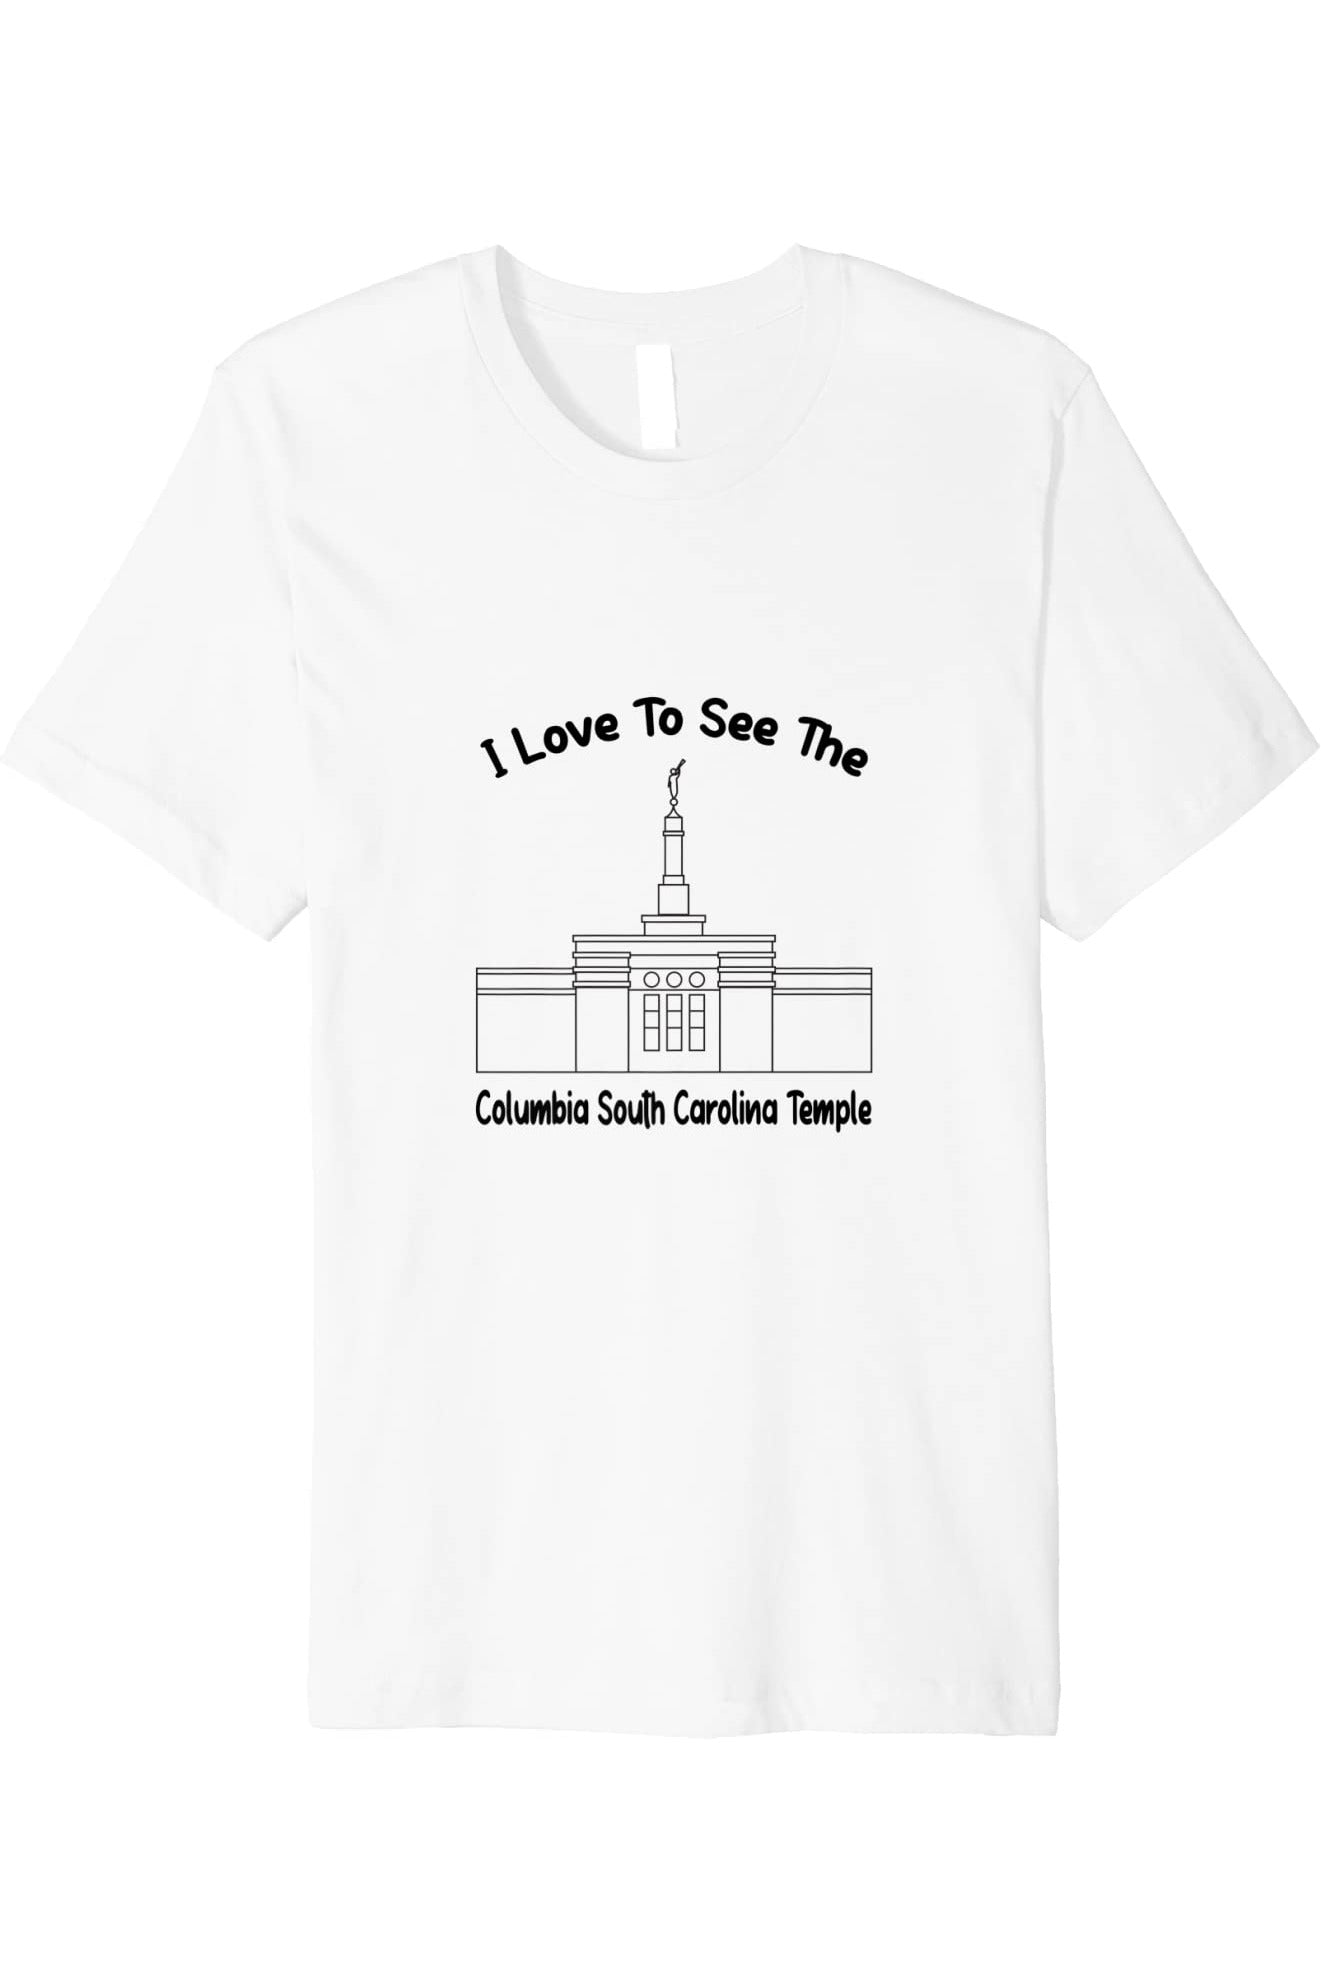 Columbia South Carolina Temple T-Shirt - Premium - Primary Style (English) US